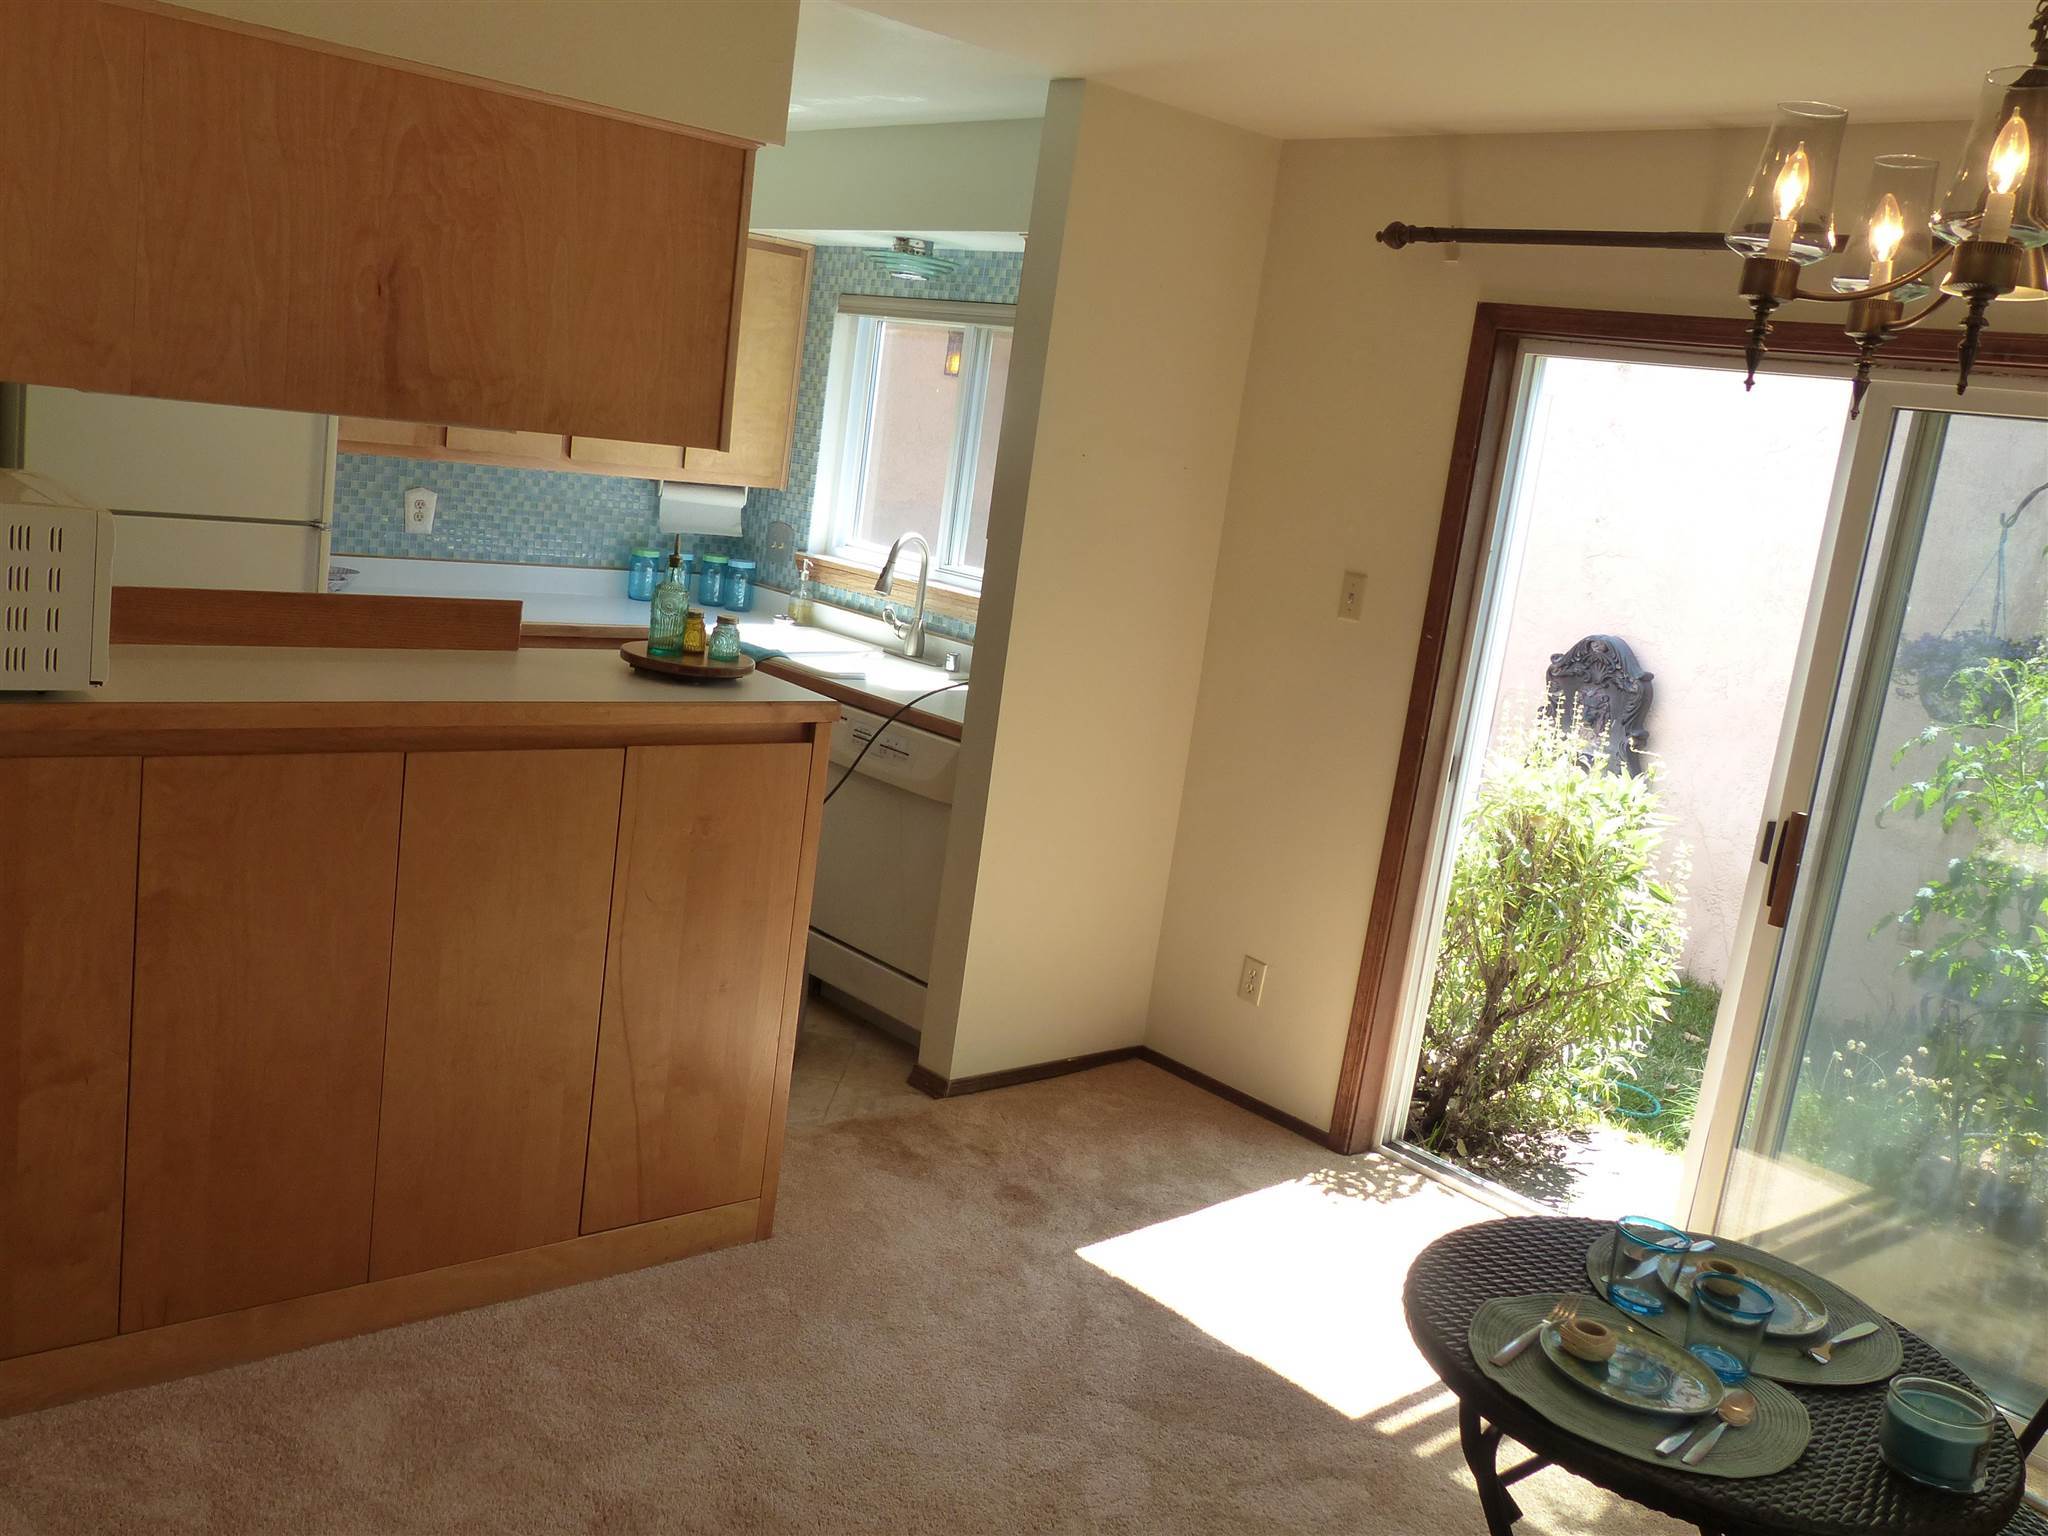 304 Ridgecrest, White Rock, New Mexico 87547, 2 Bedrooms Bedrooms, ,1 BathroomBathrooms,Residential,For Sale,304 Ridgecrest,202103131